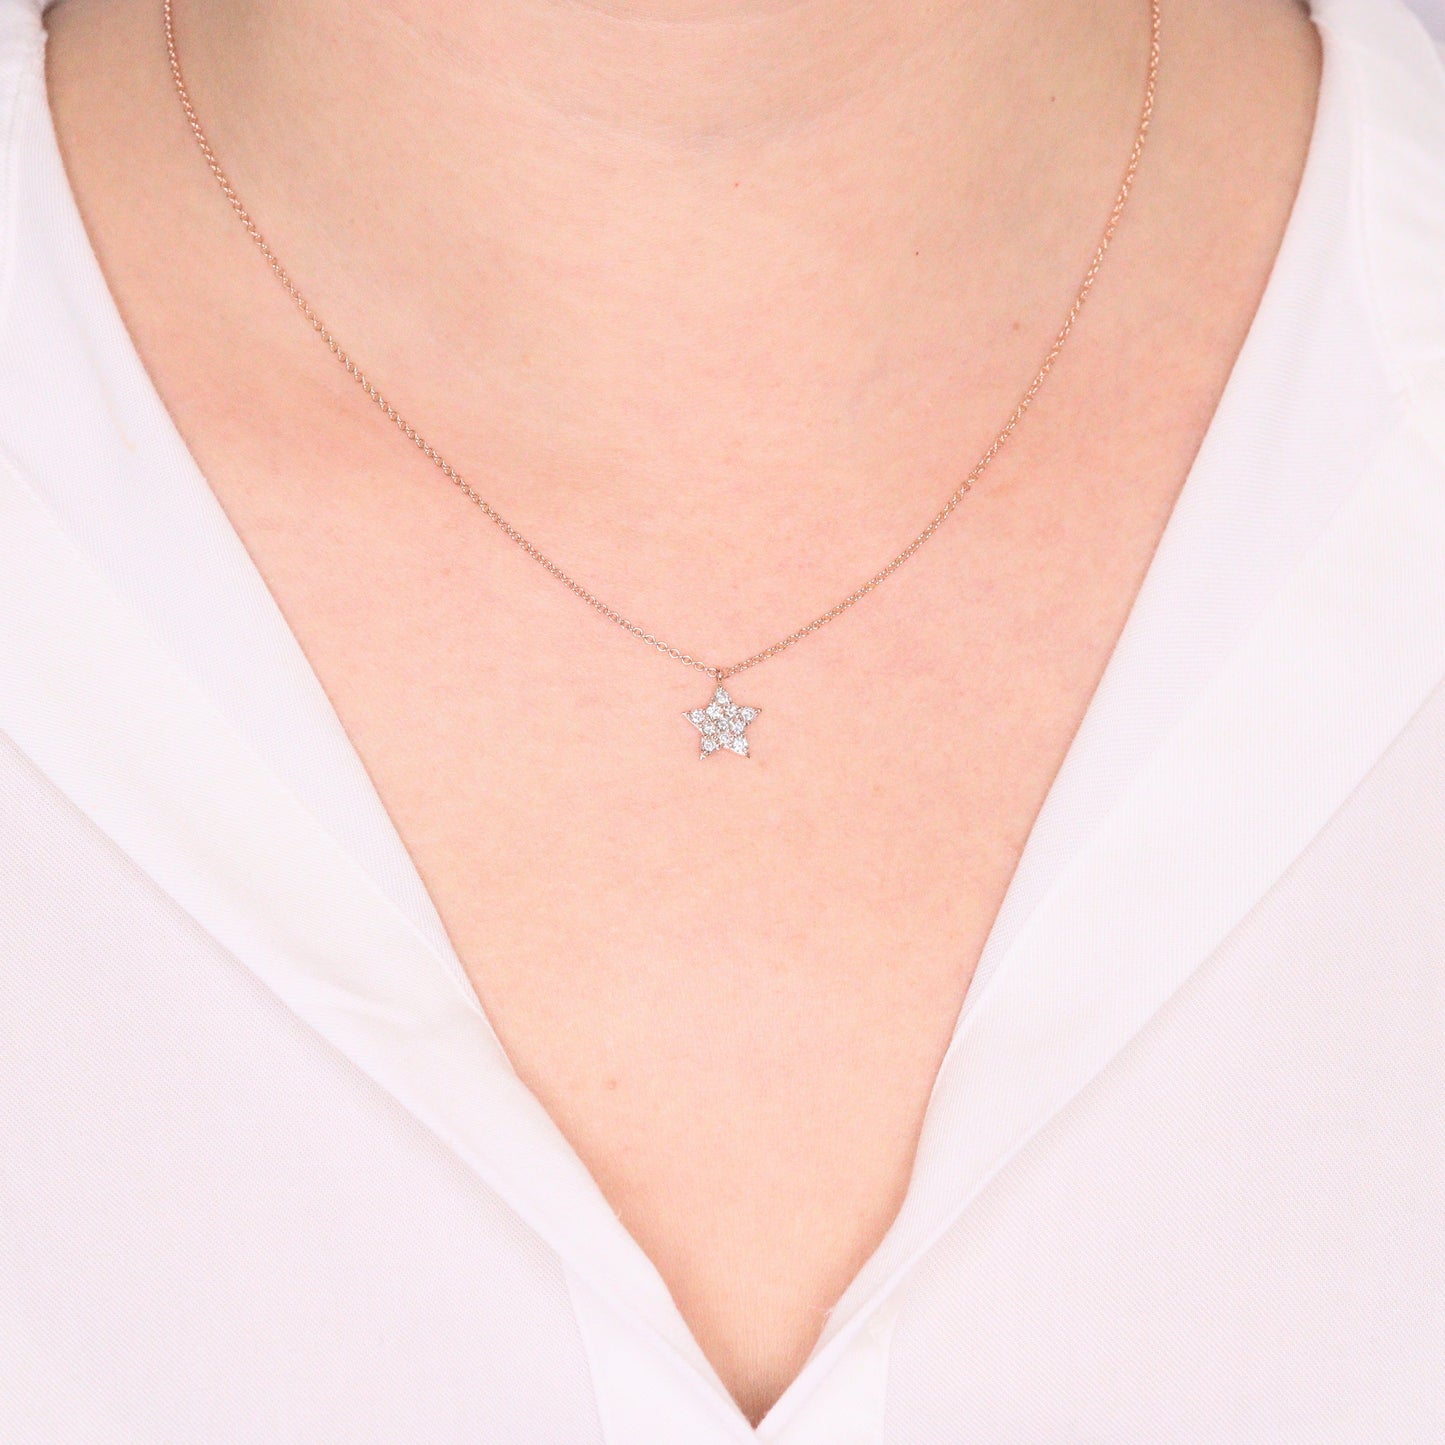 Diamond Necklace / Star Diamond Pendant / 14k Solid Gold Star Diamond Necklace / Minimalist Necklace / Star Pendant